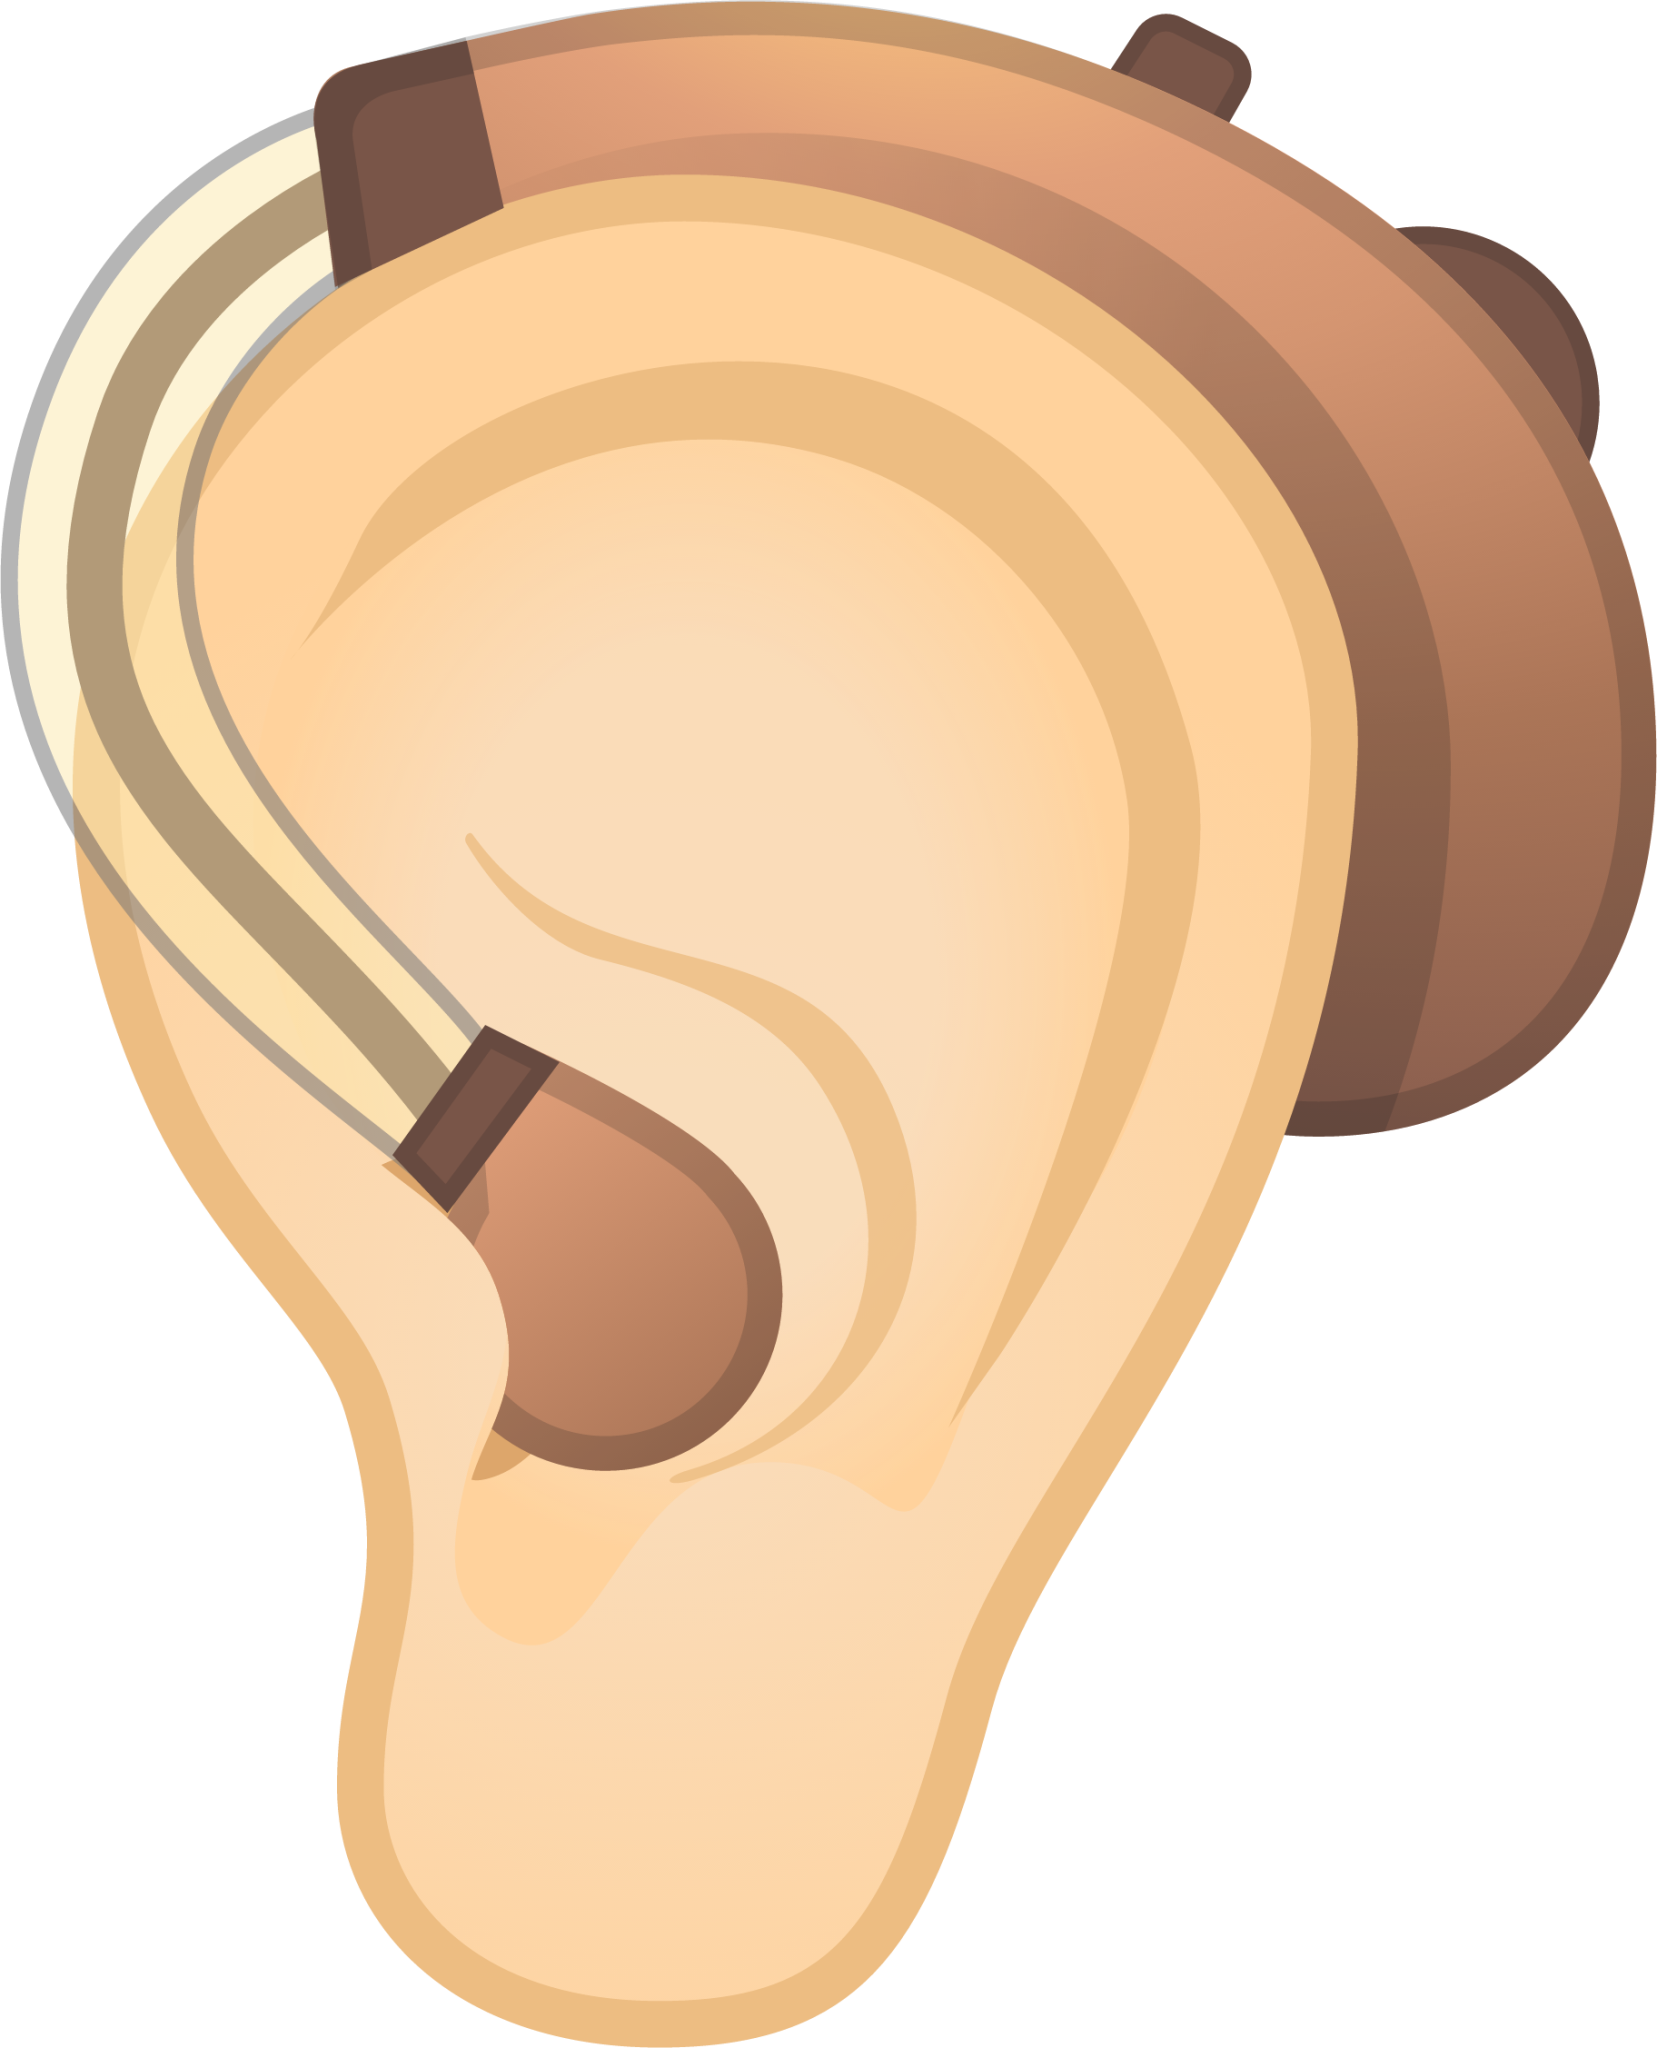 ear with hearing aid: light skin tone emoji